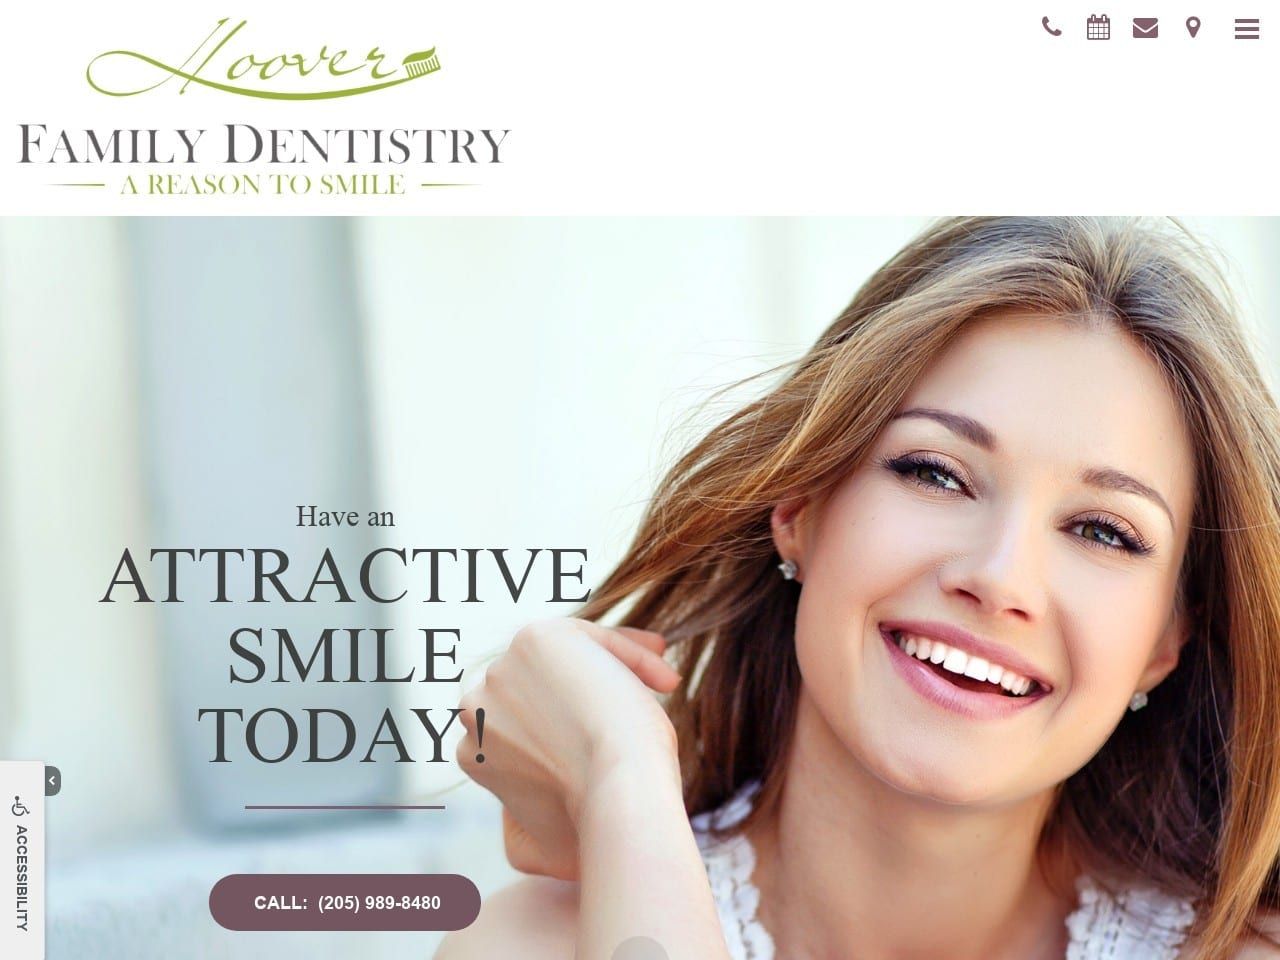 Hoover Family Dentistry Website Screenshot from hooverfamilydentistry.com